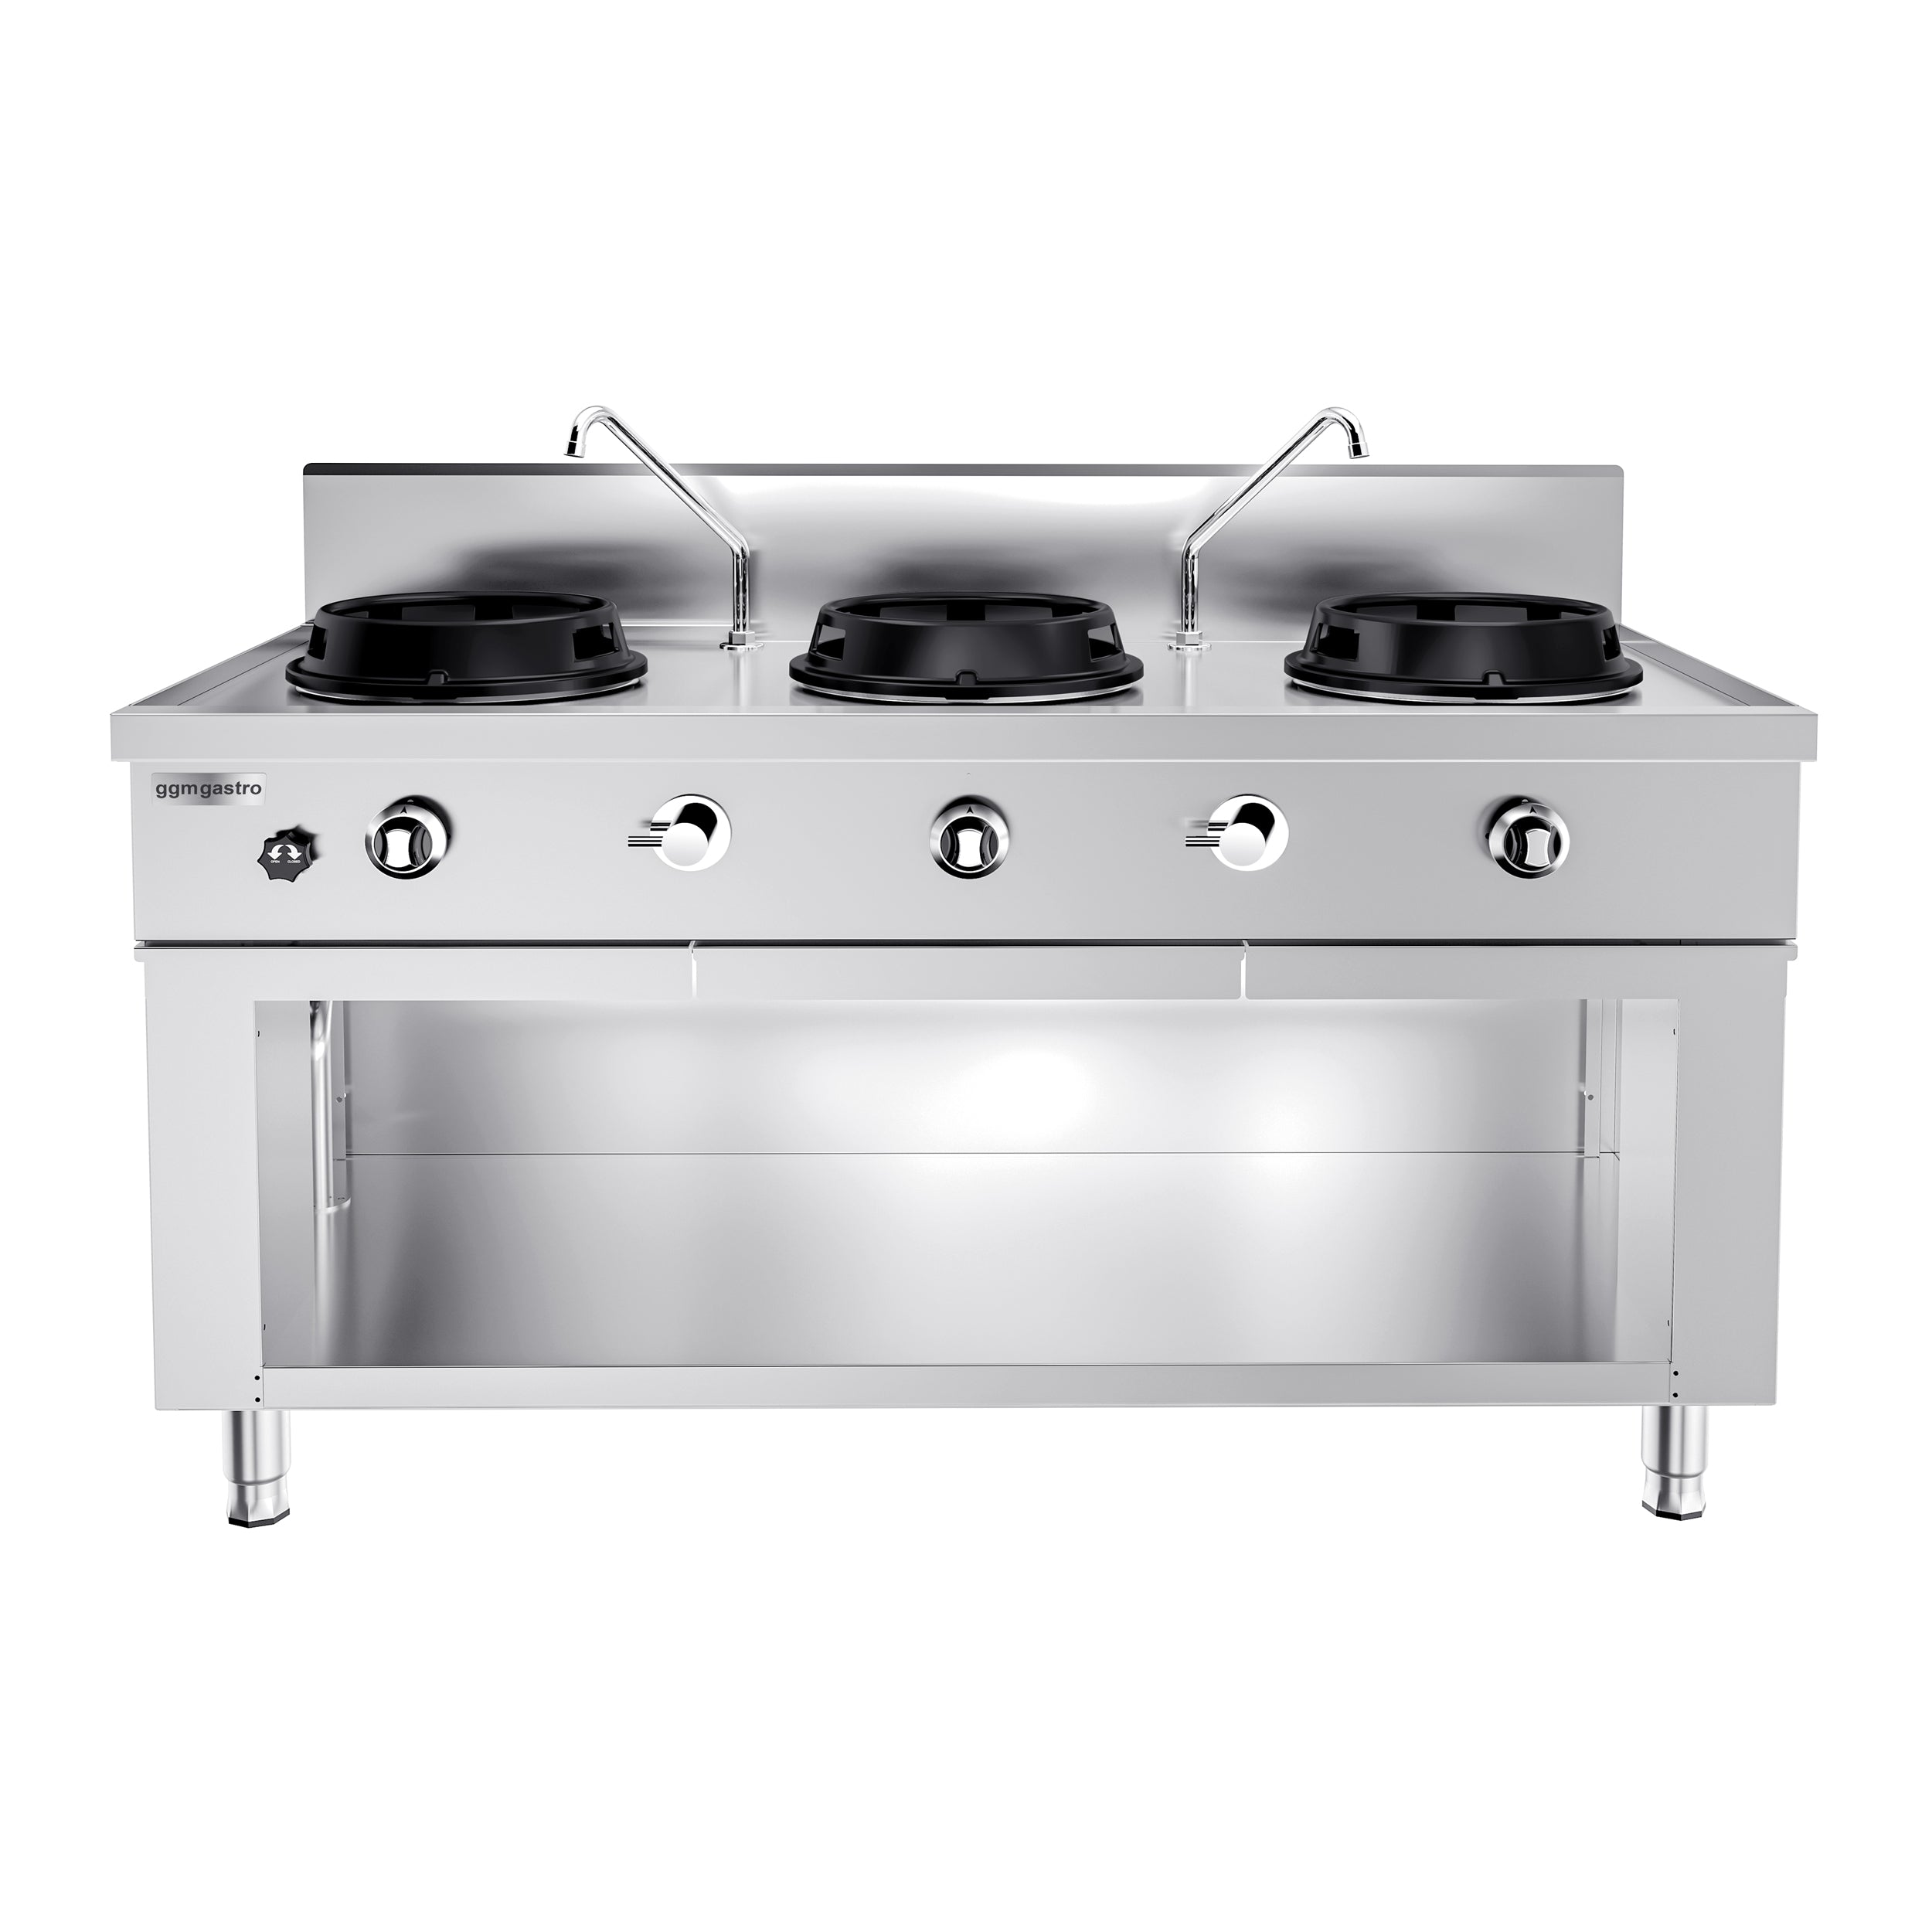 Gass wok komfyr - med 3 brennere - 3x 15 kW